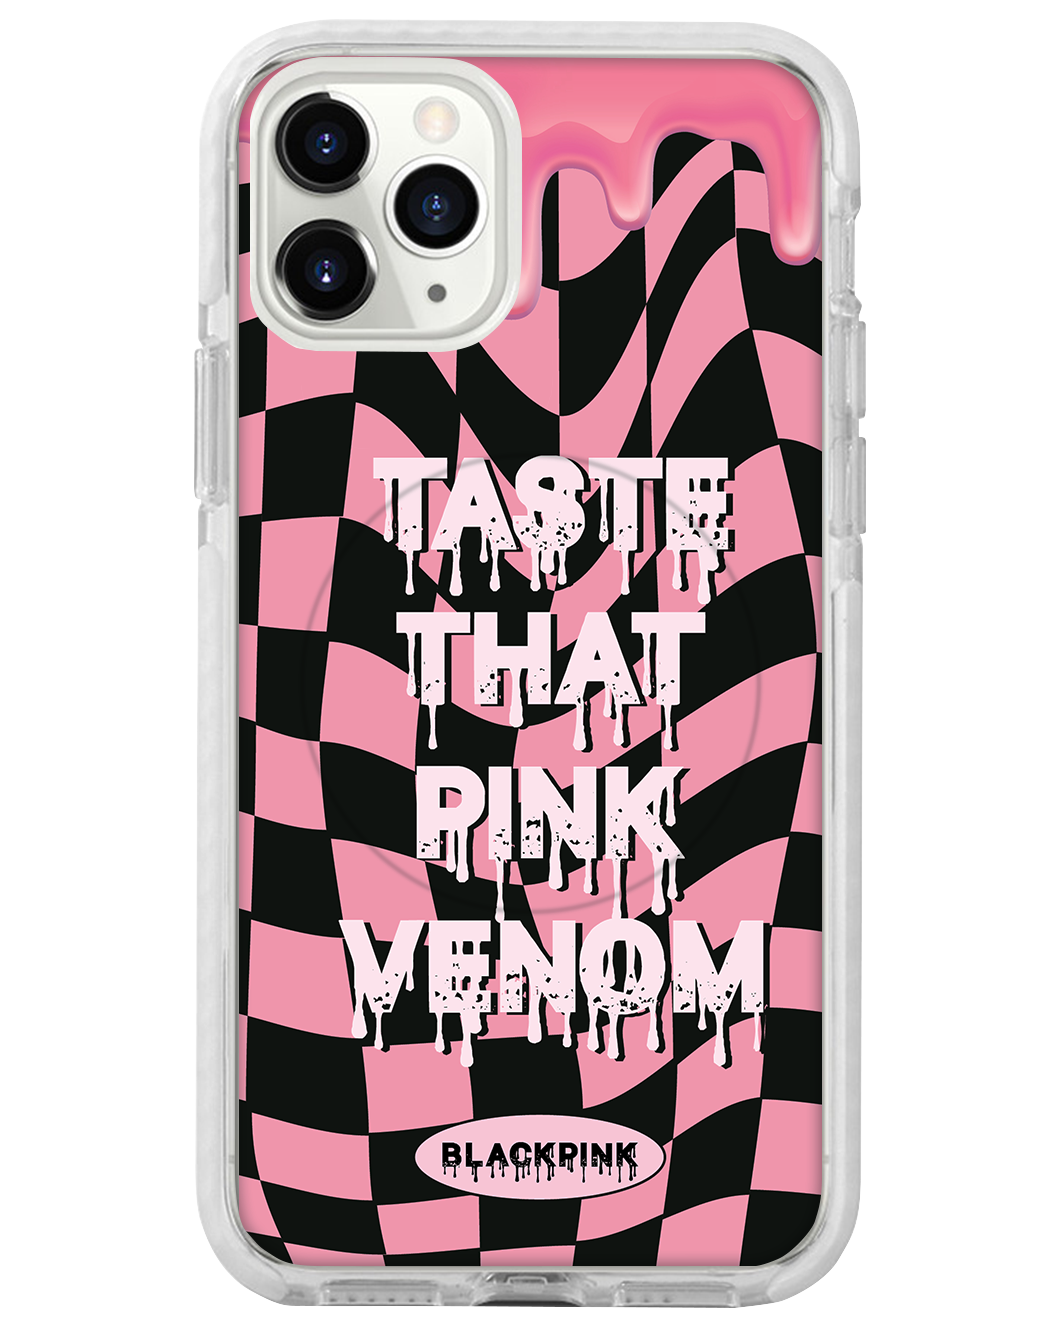 iPhone - Blackpink Pink Venom